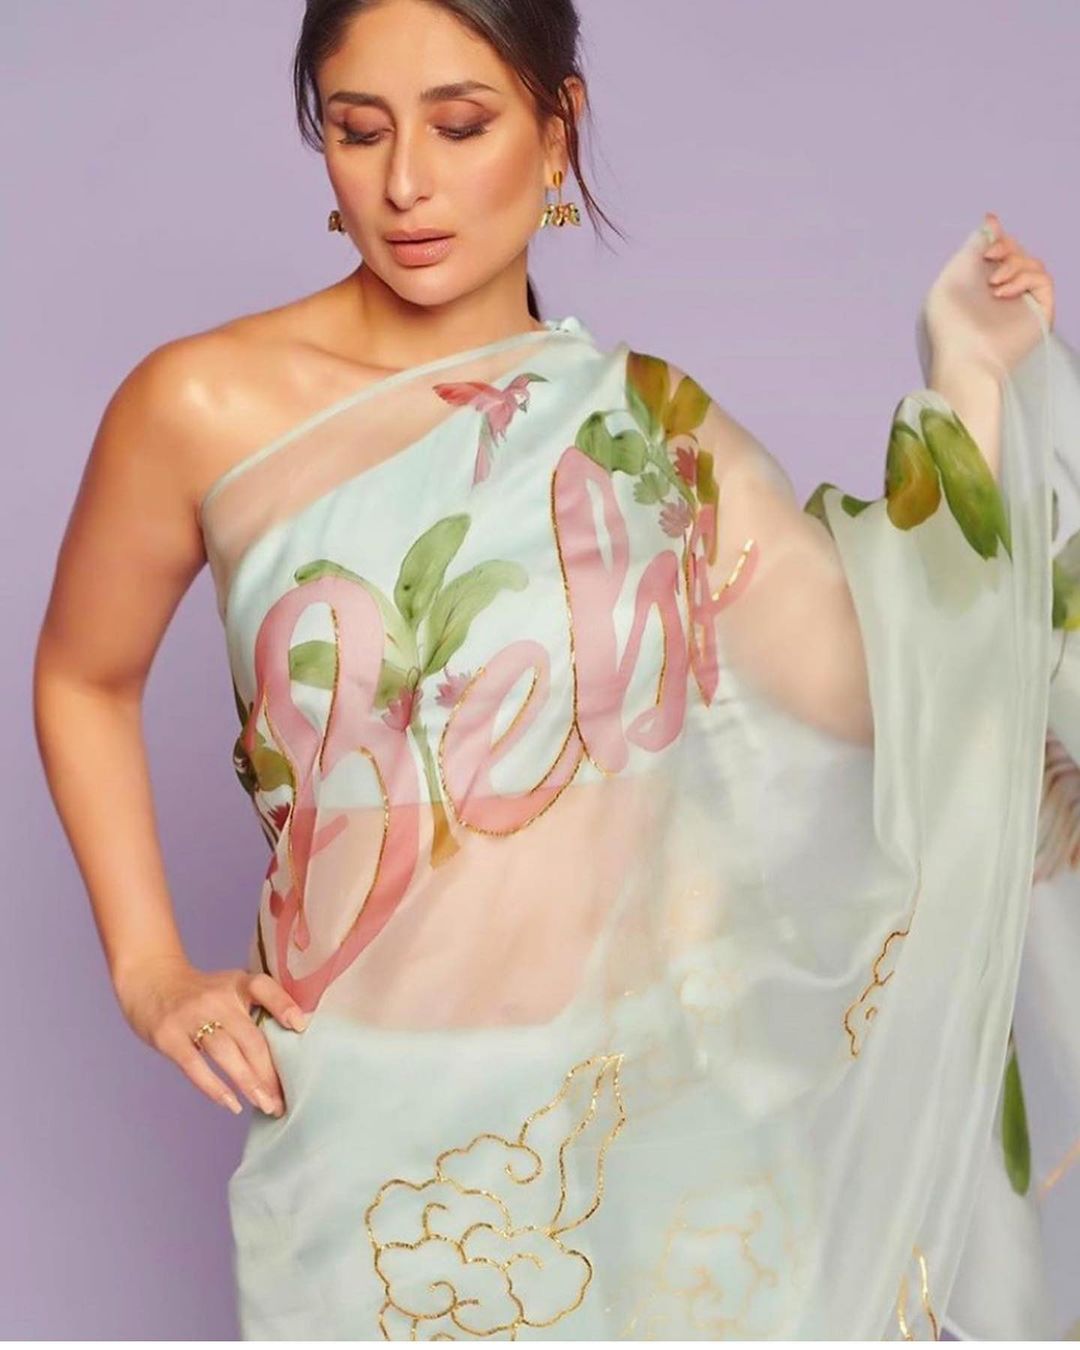 5 Trendy Saree Blouse Designs By Kajol